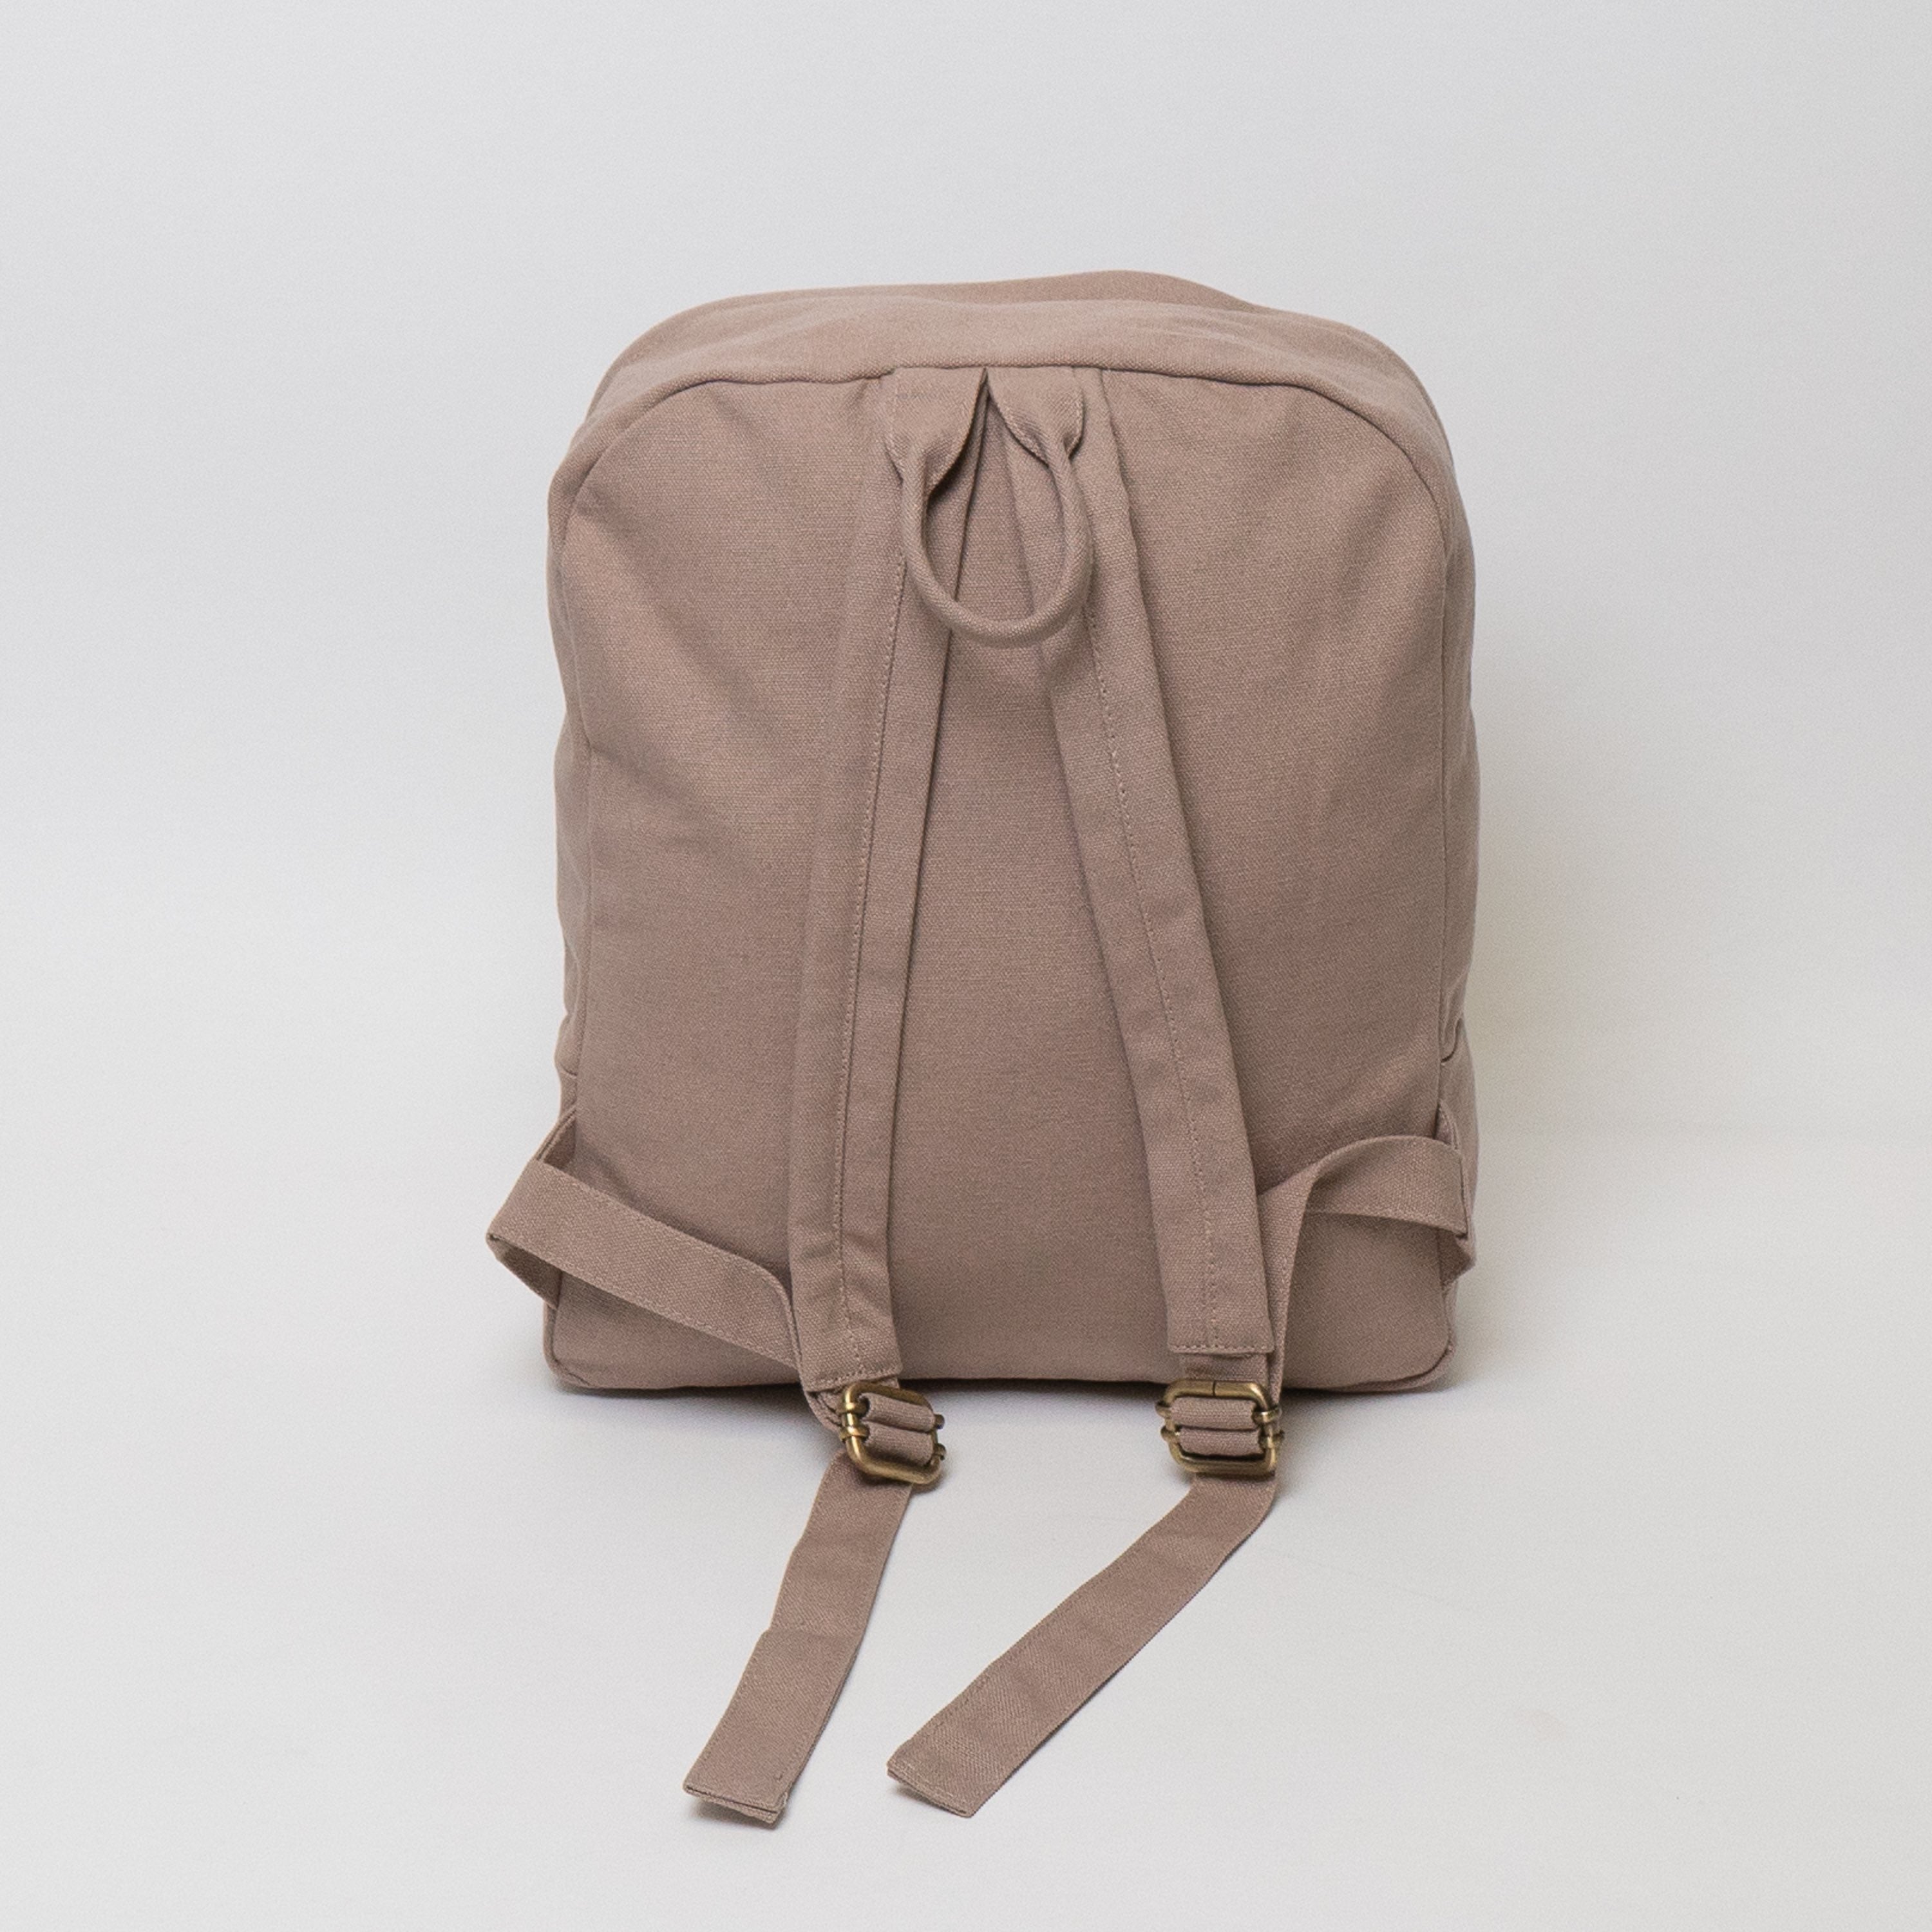 Aesthetic mini backpack